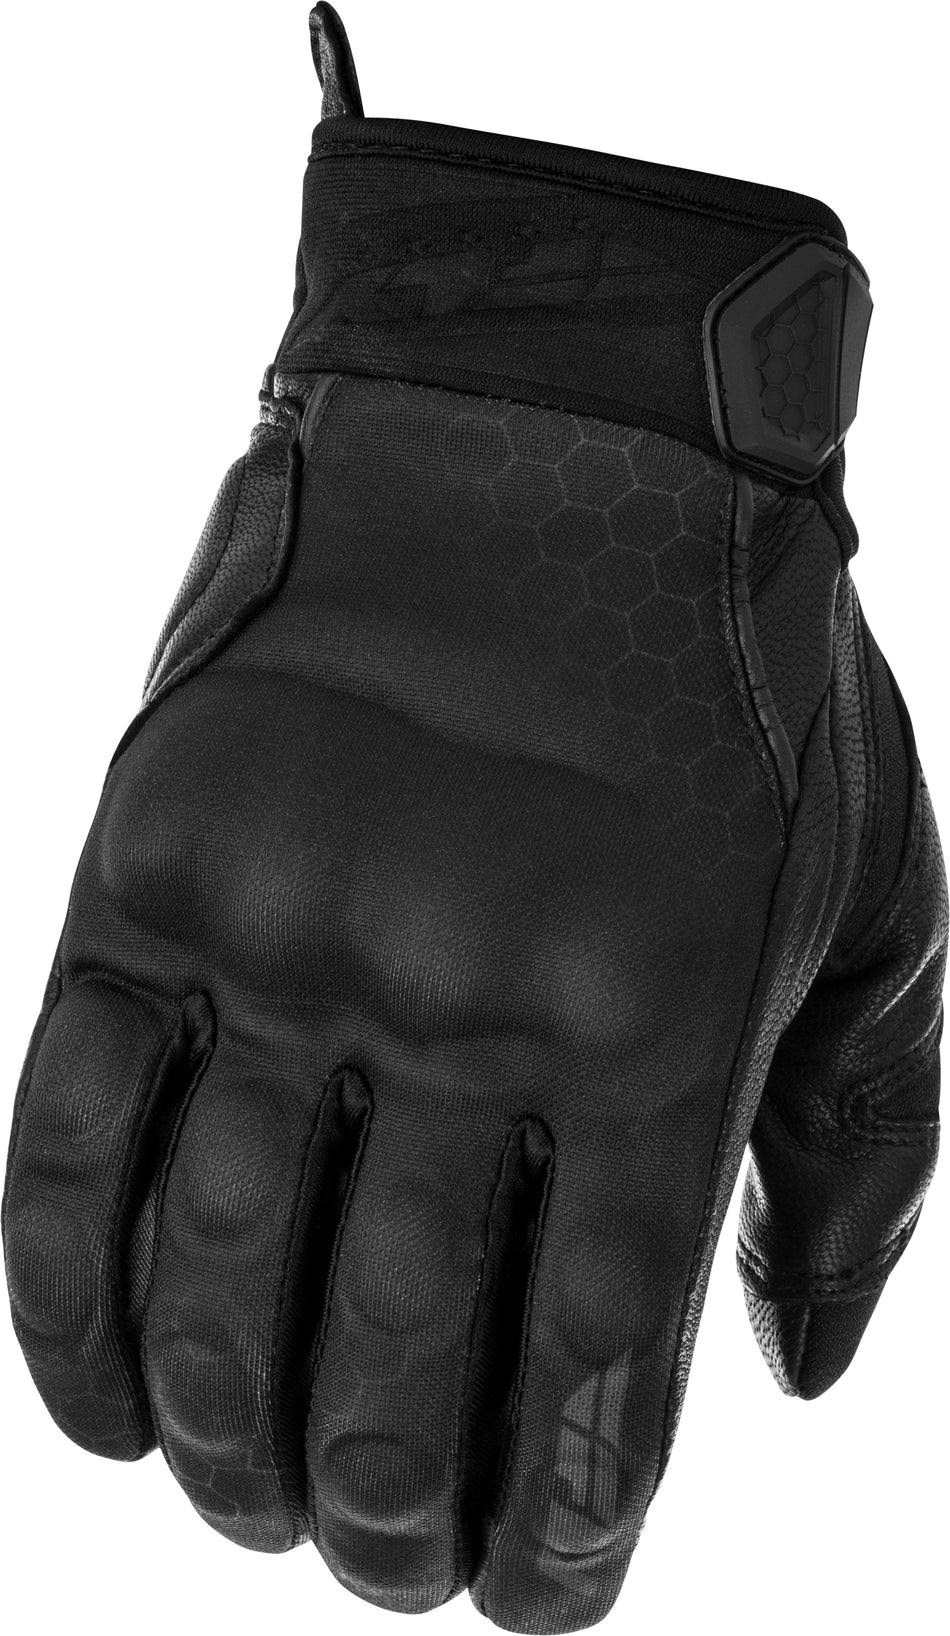 FLY RACING Subvert Gloves Blackout Lg 476-2075L